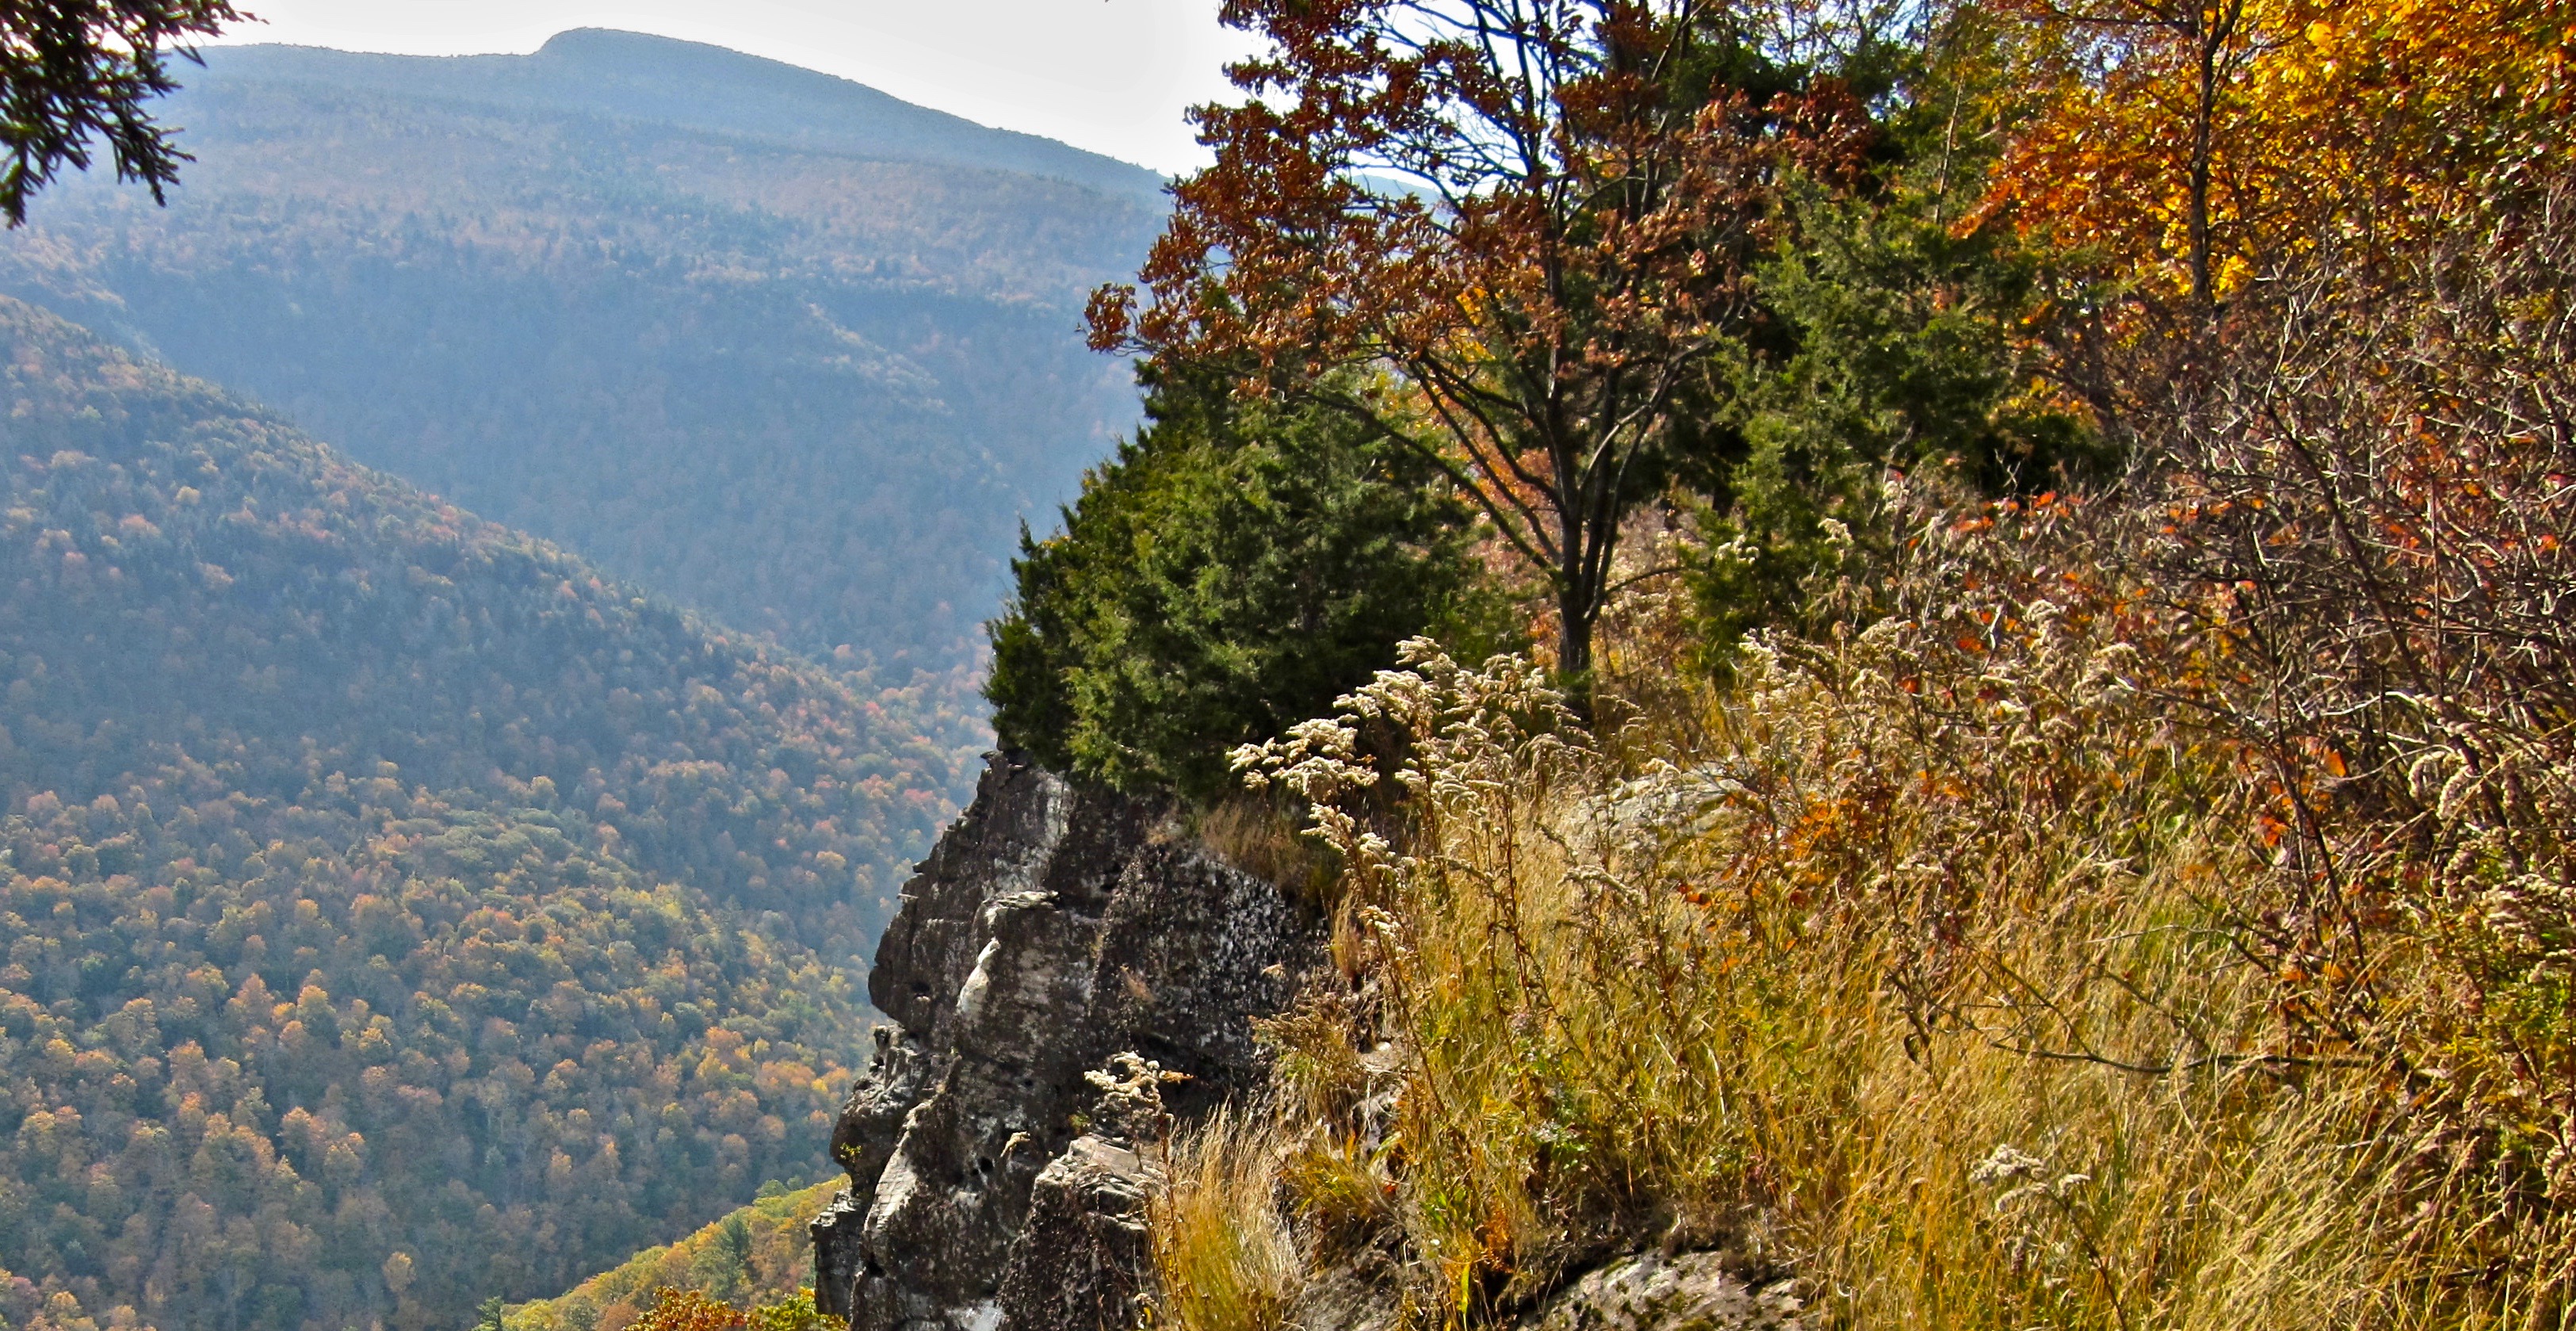 Catskill Mountain Club: Preserving America's First Wilderness